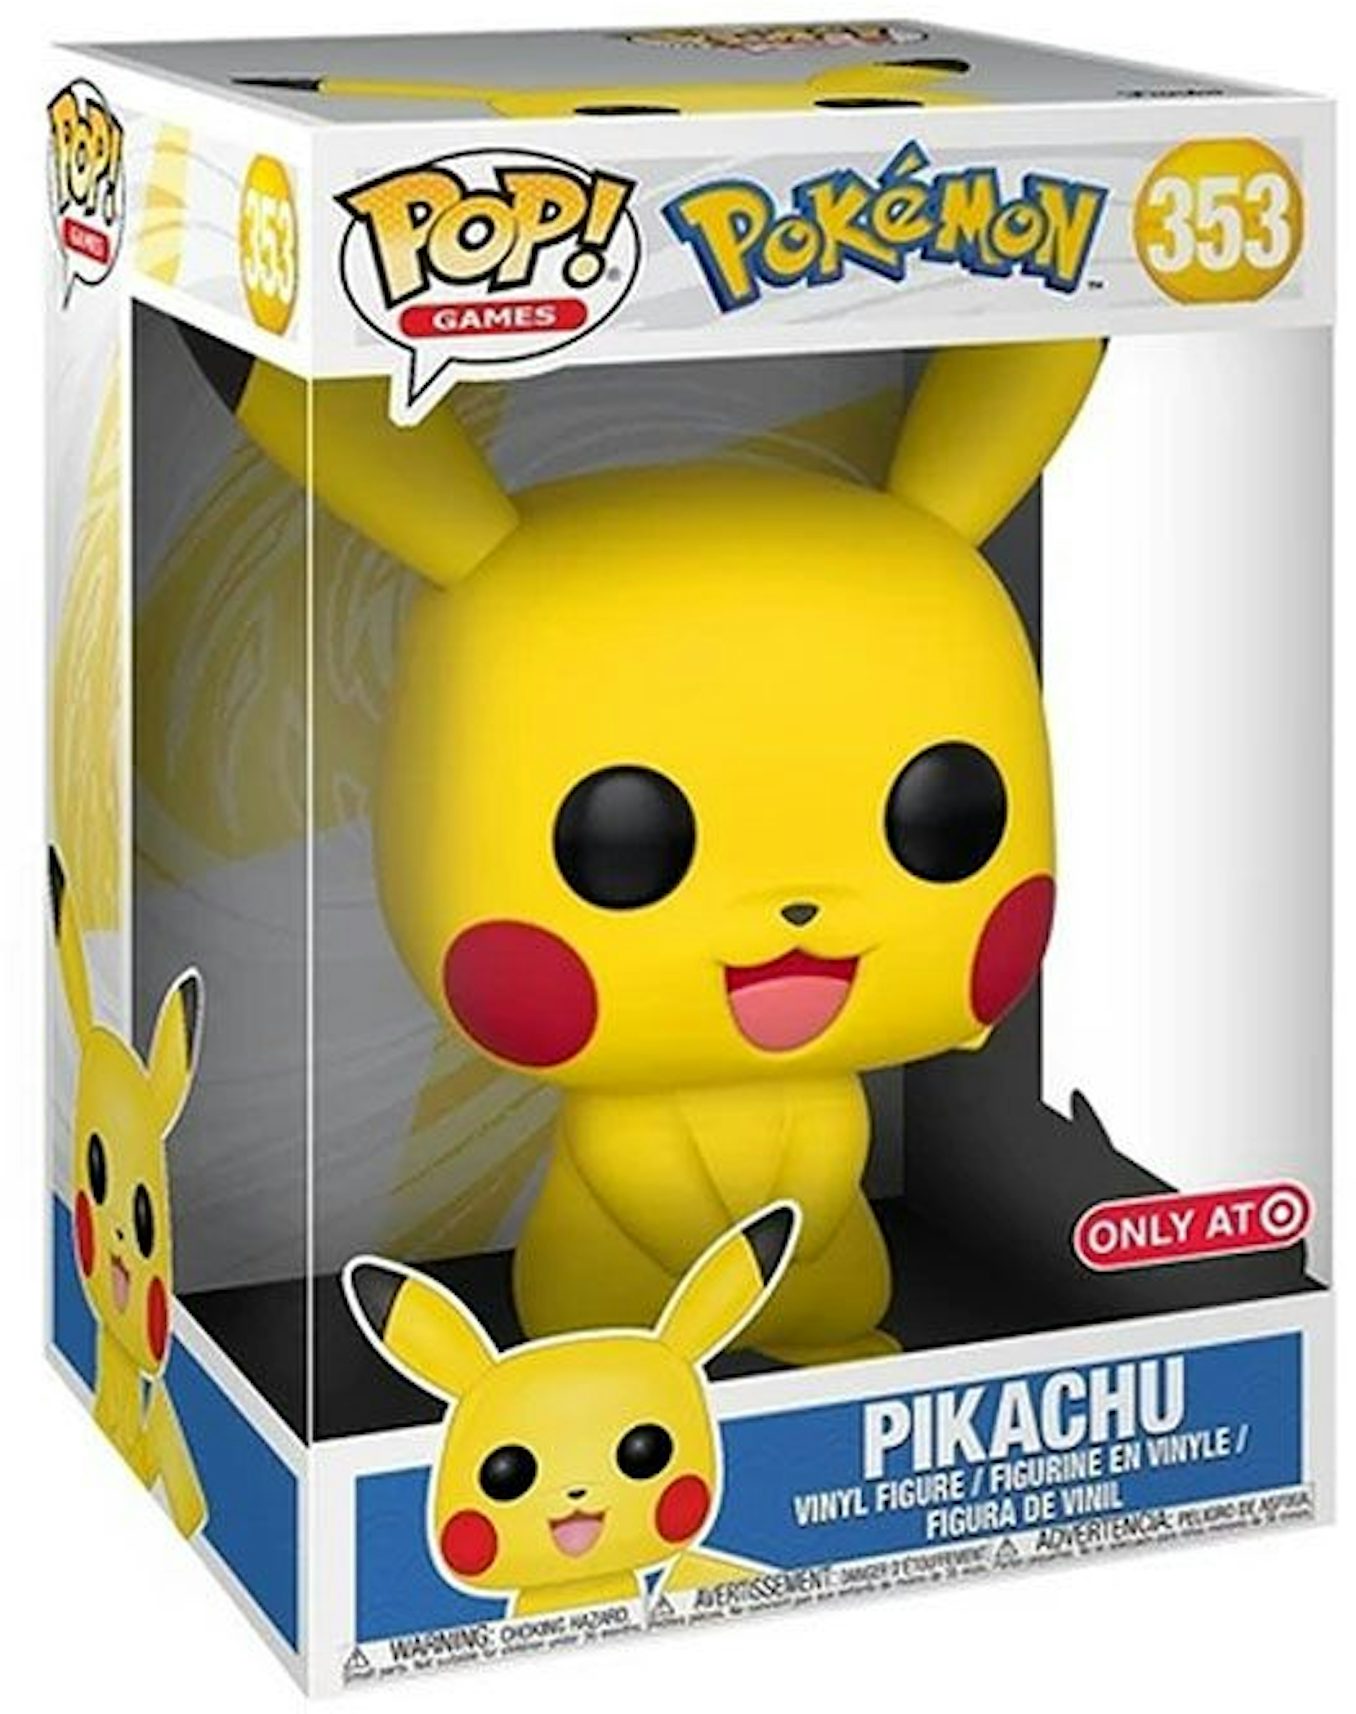 https://images.stockx.com/images/Funko-Pop-Games-Pokemon-Pikachu-10-inch-Target-Exclusive-Figure-353.jpg?fit=fill&bg=FFFFFF&w=1200&h=857&fm=jpg&auto=compress&dpr=2&trim=color&updated_at=1607718788&q=60